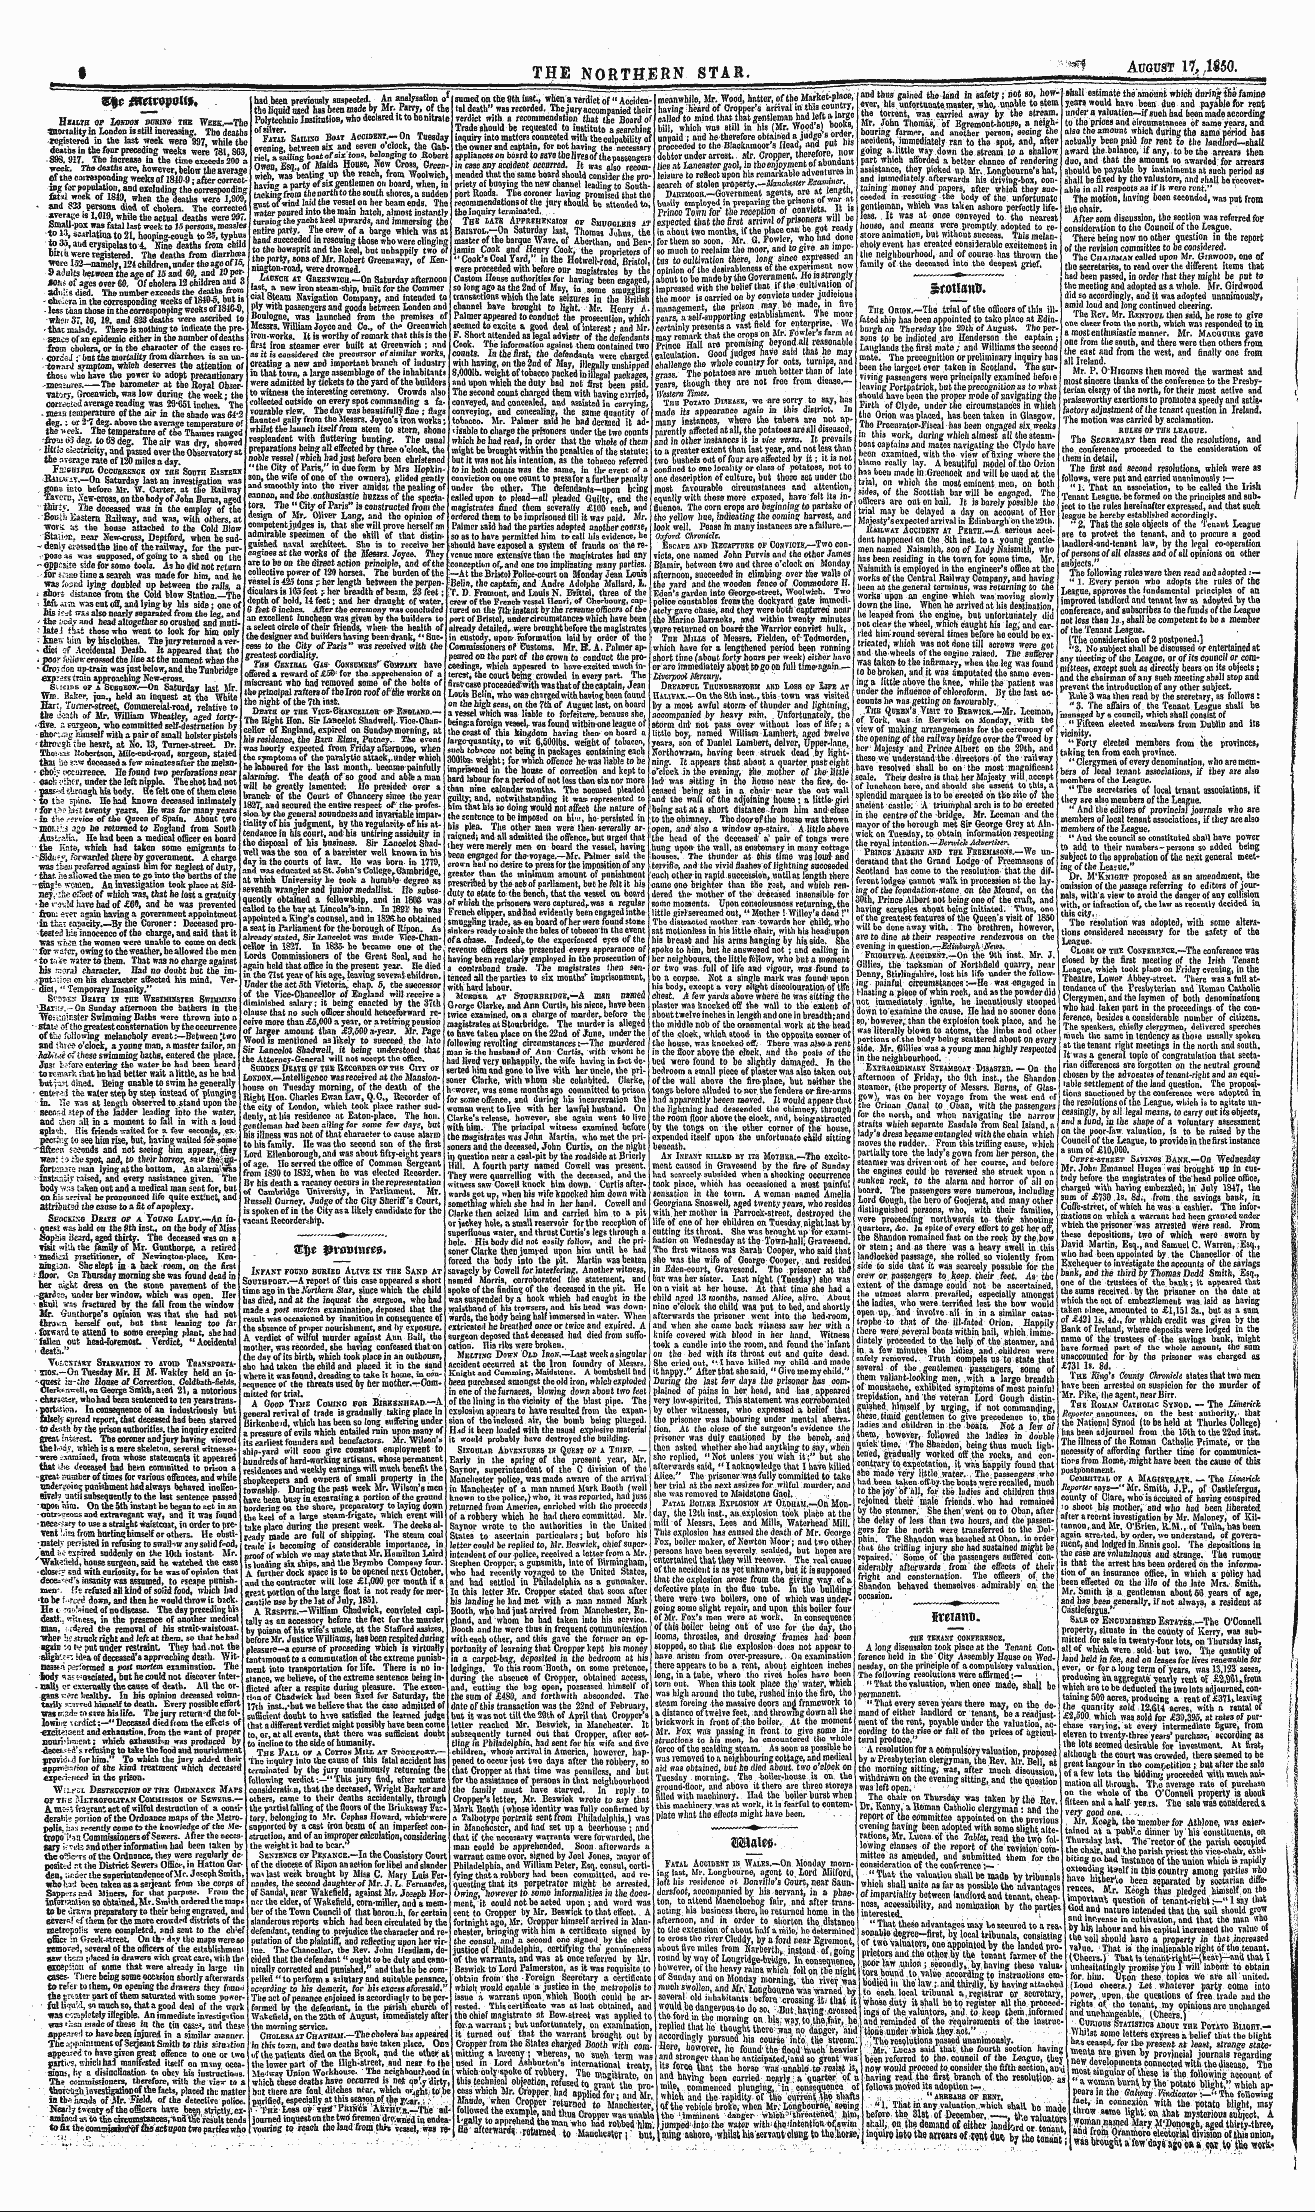 Northern Star (1837-1852): jS F Y, 3rd edition - Sic Ifrettopott*,